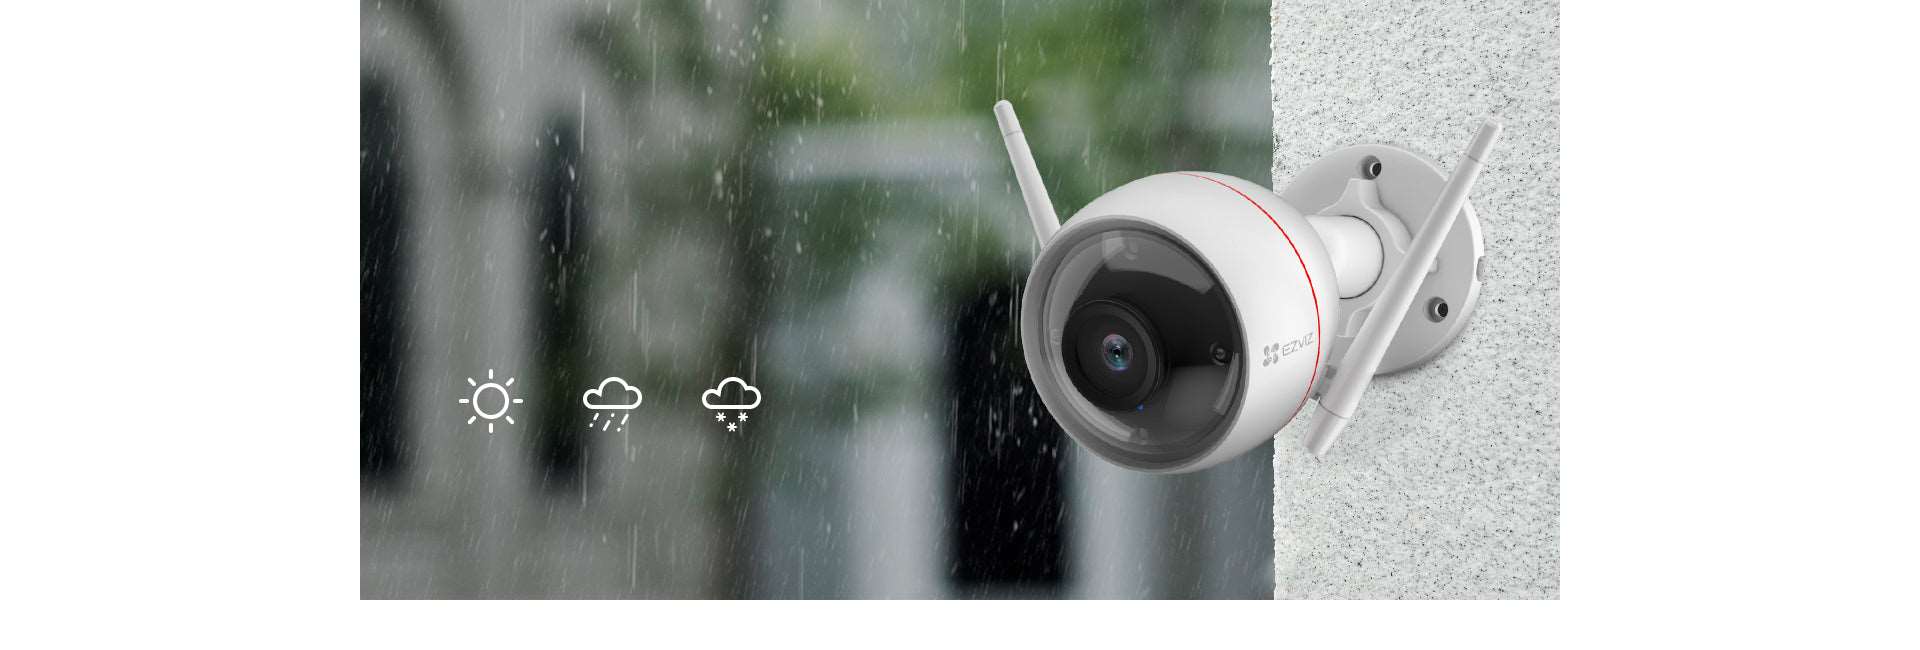 Ezviz C3W Pro 4MP Color Night Vision Security Camera